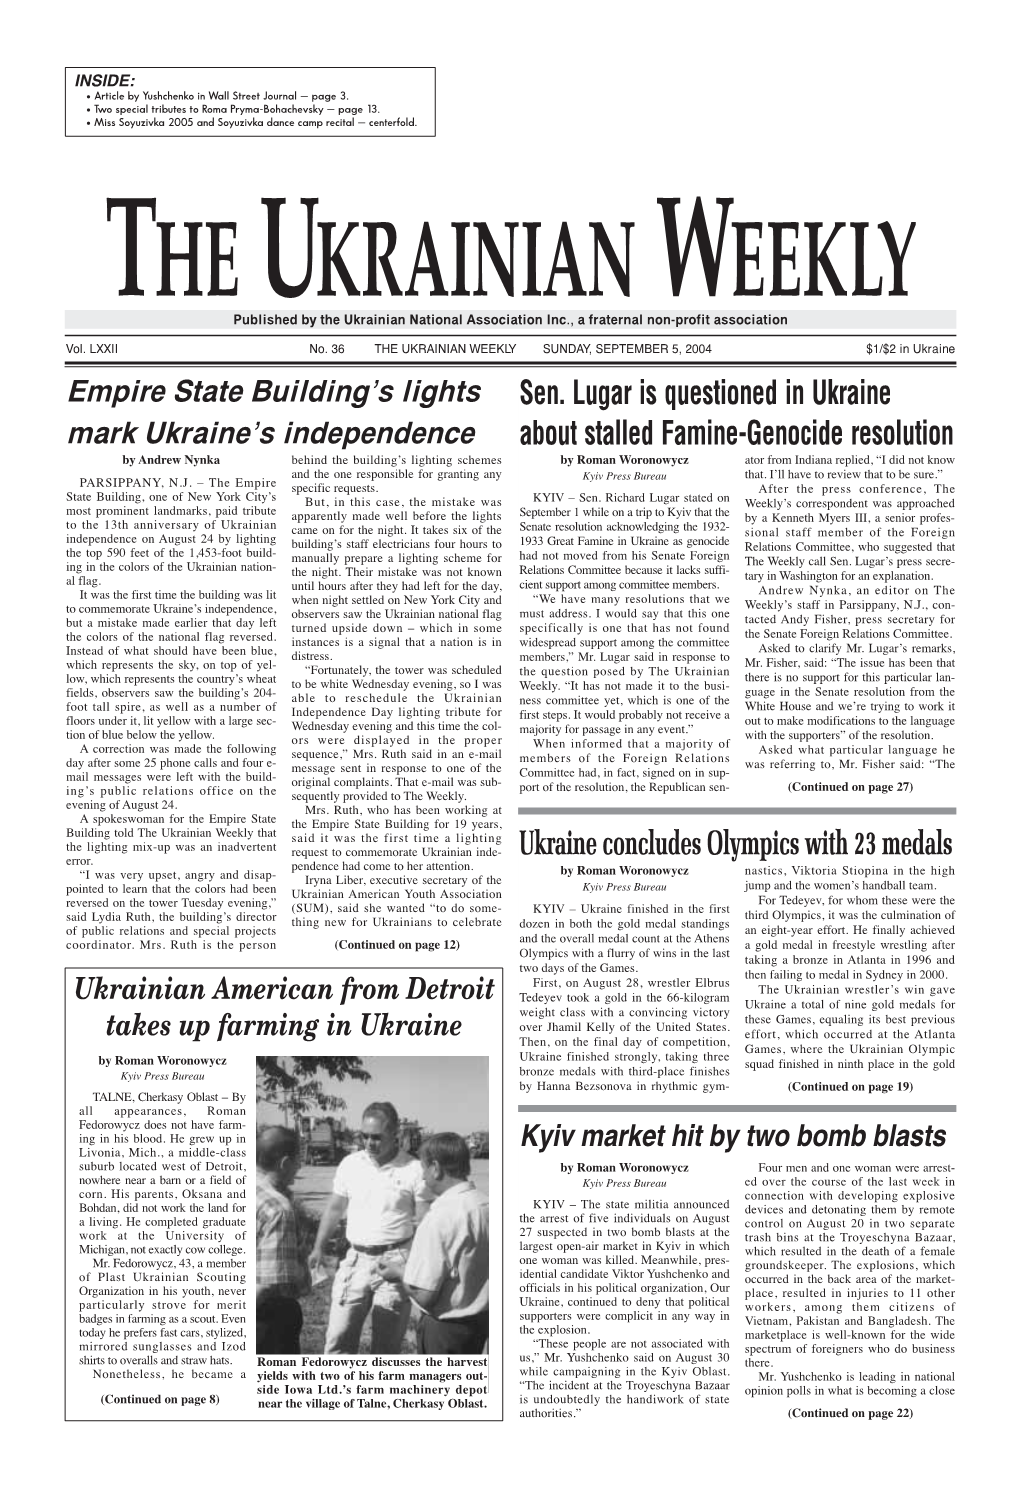 The Ukrainian Weekly 2004, No.36